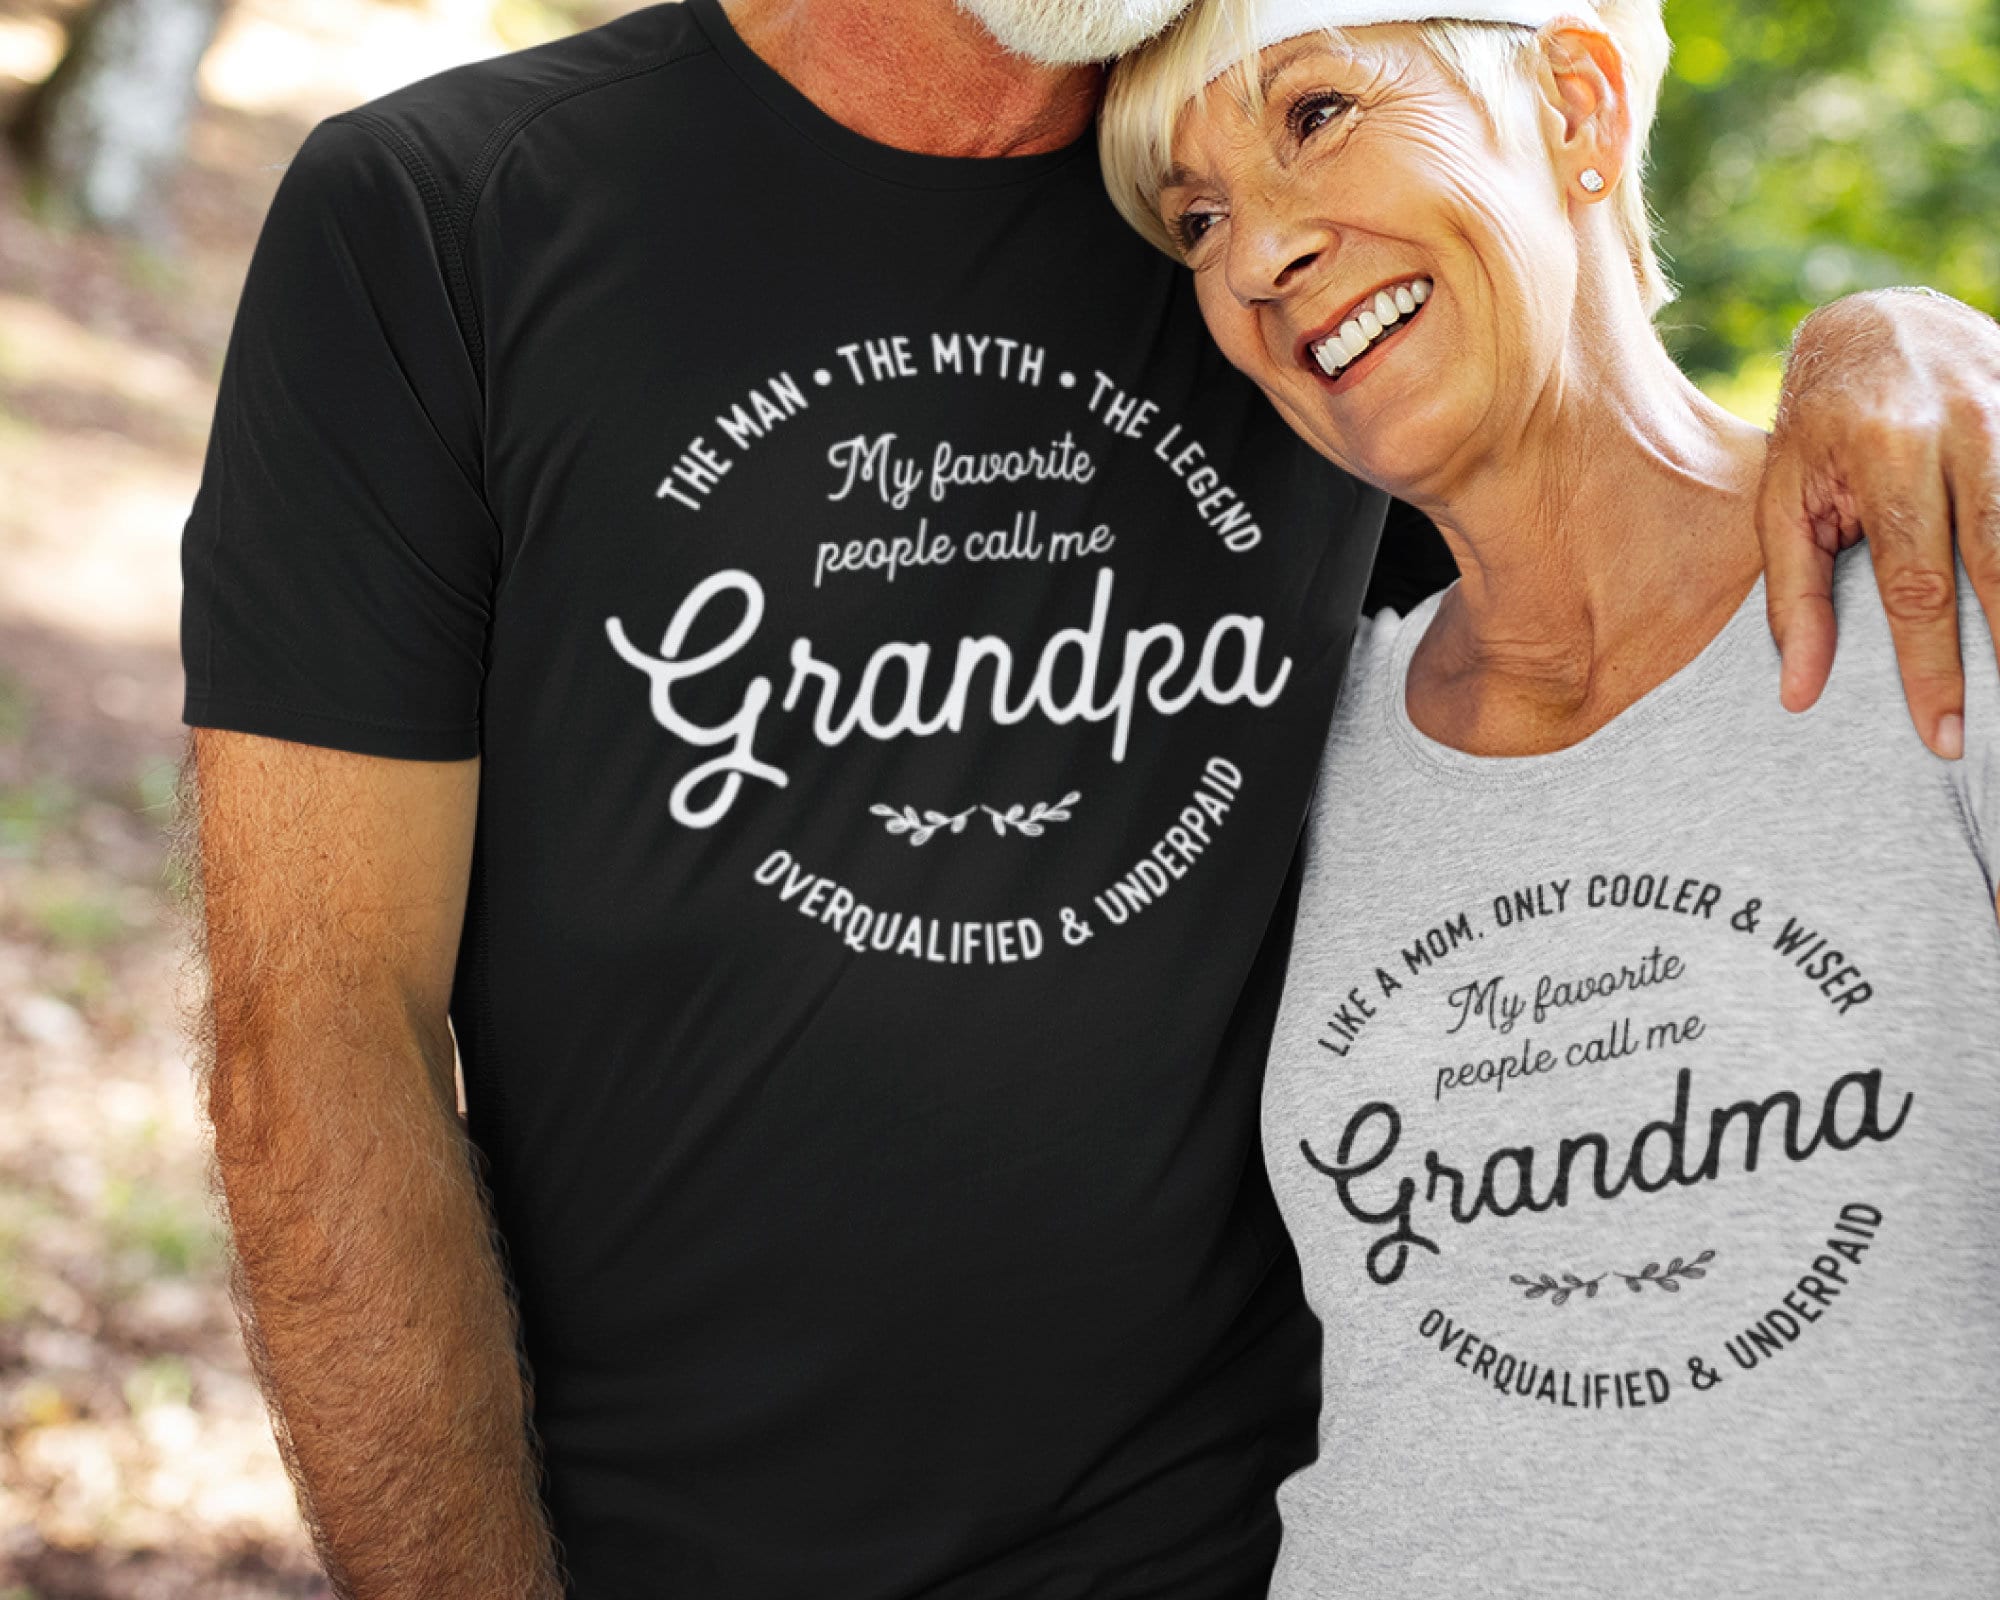 Grandma and Grandpa Matching Tshirts Gift for Grandparents